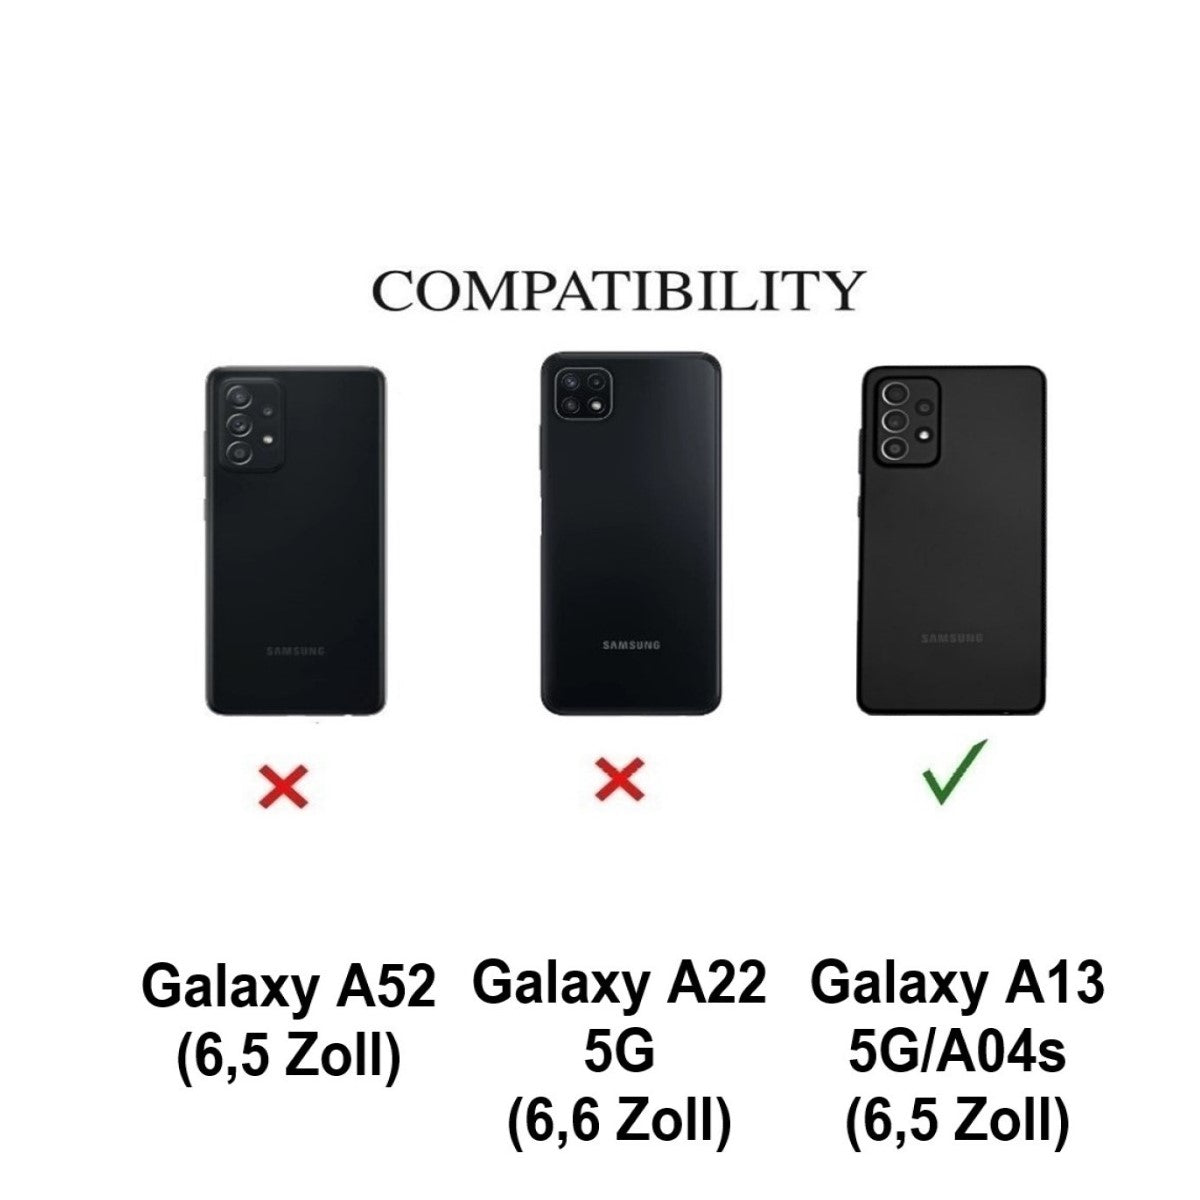 Hülle für Samsung Galaxy A13 5G/A04s Handyhülle Silikon Case Cover Matt Schwarz